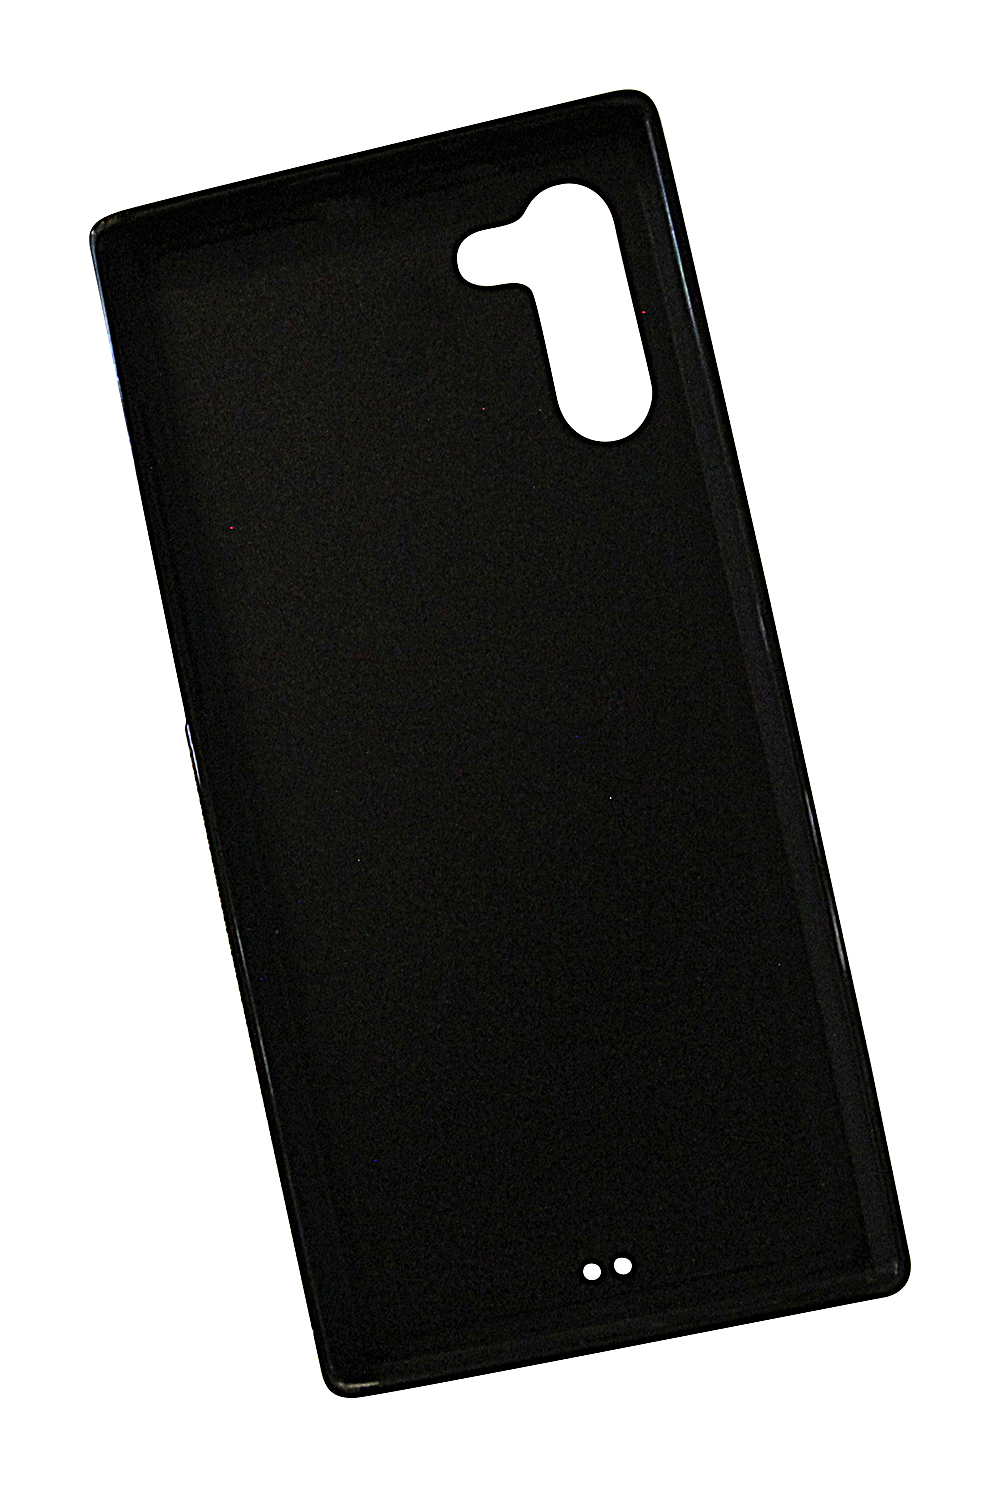 Skimblocker Magnet Wallet Samsung Galaxy Note 10 (N970F/DS)